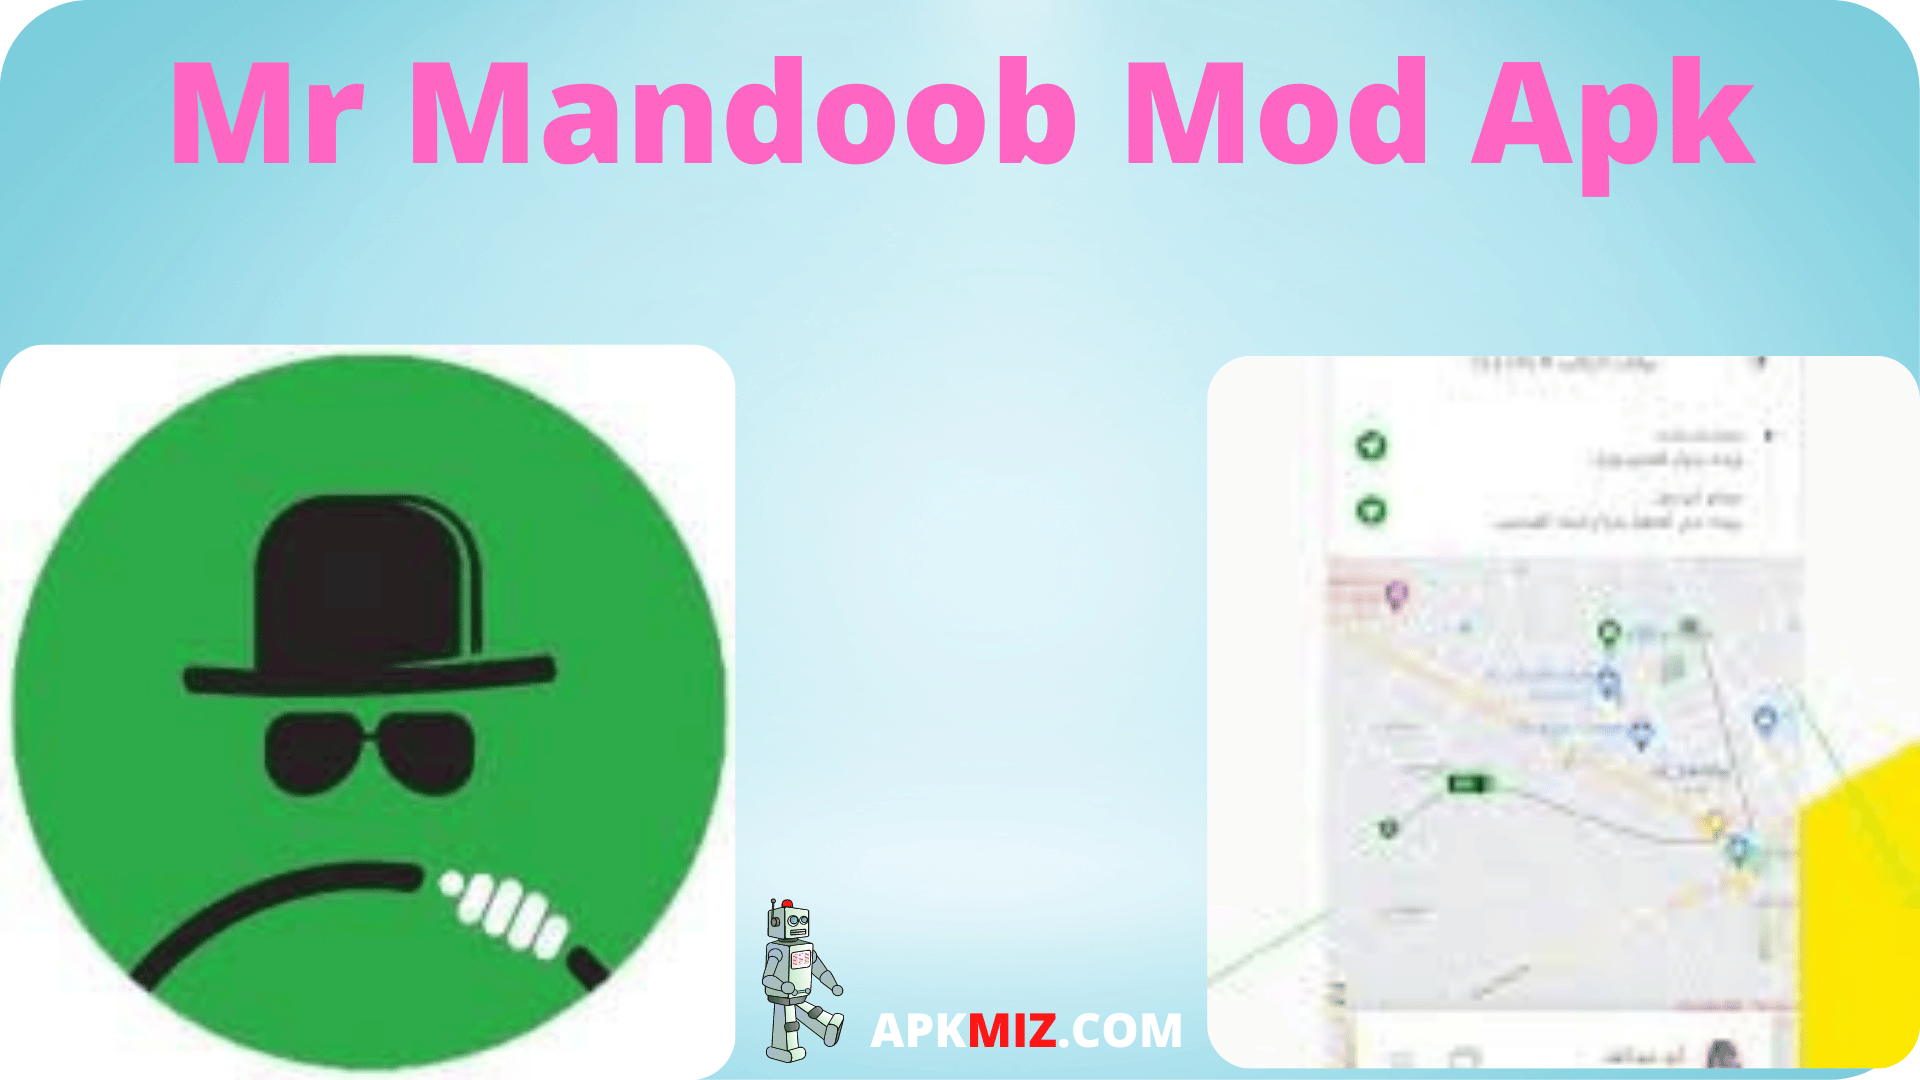 Mr Mandoob Mod Apk